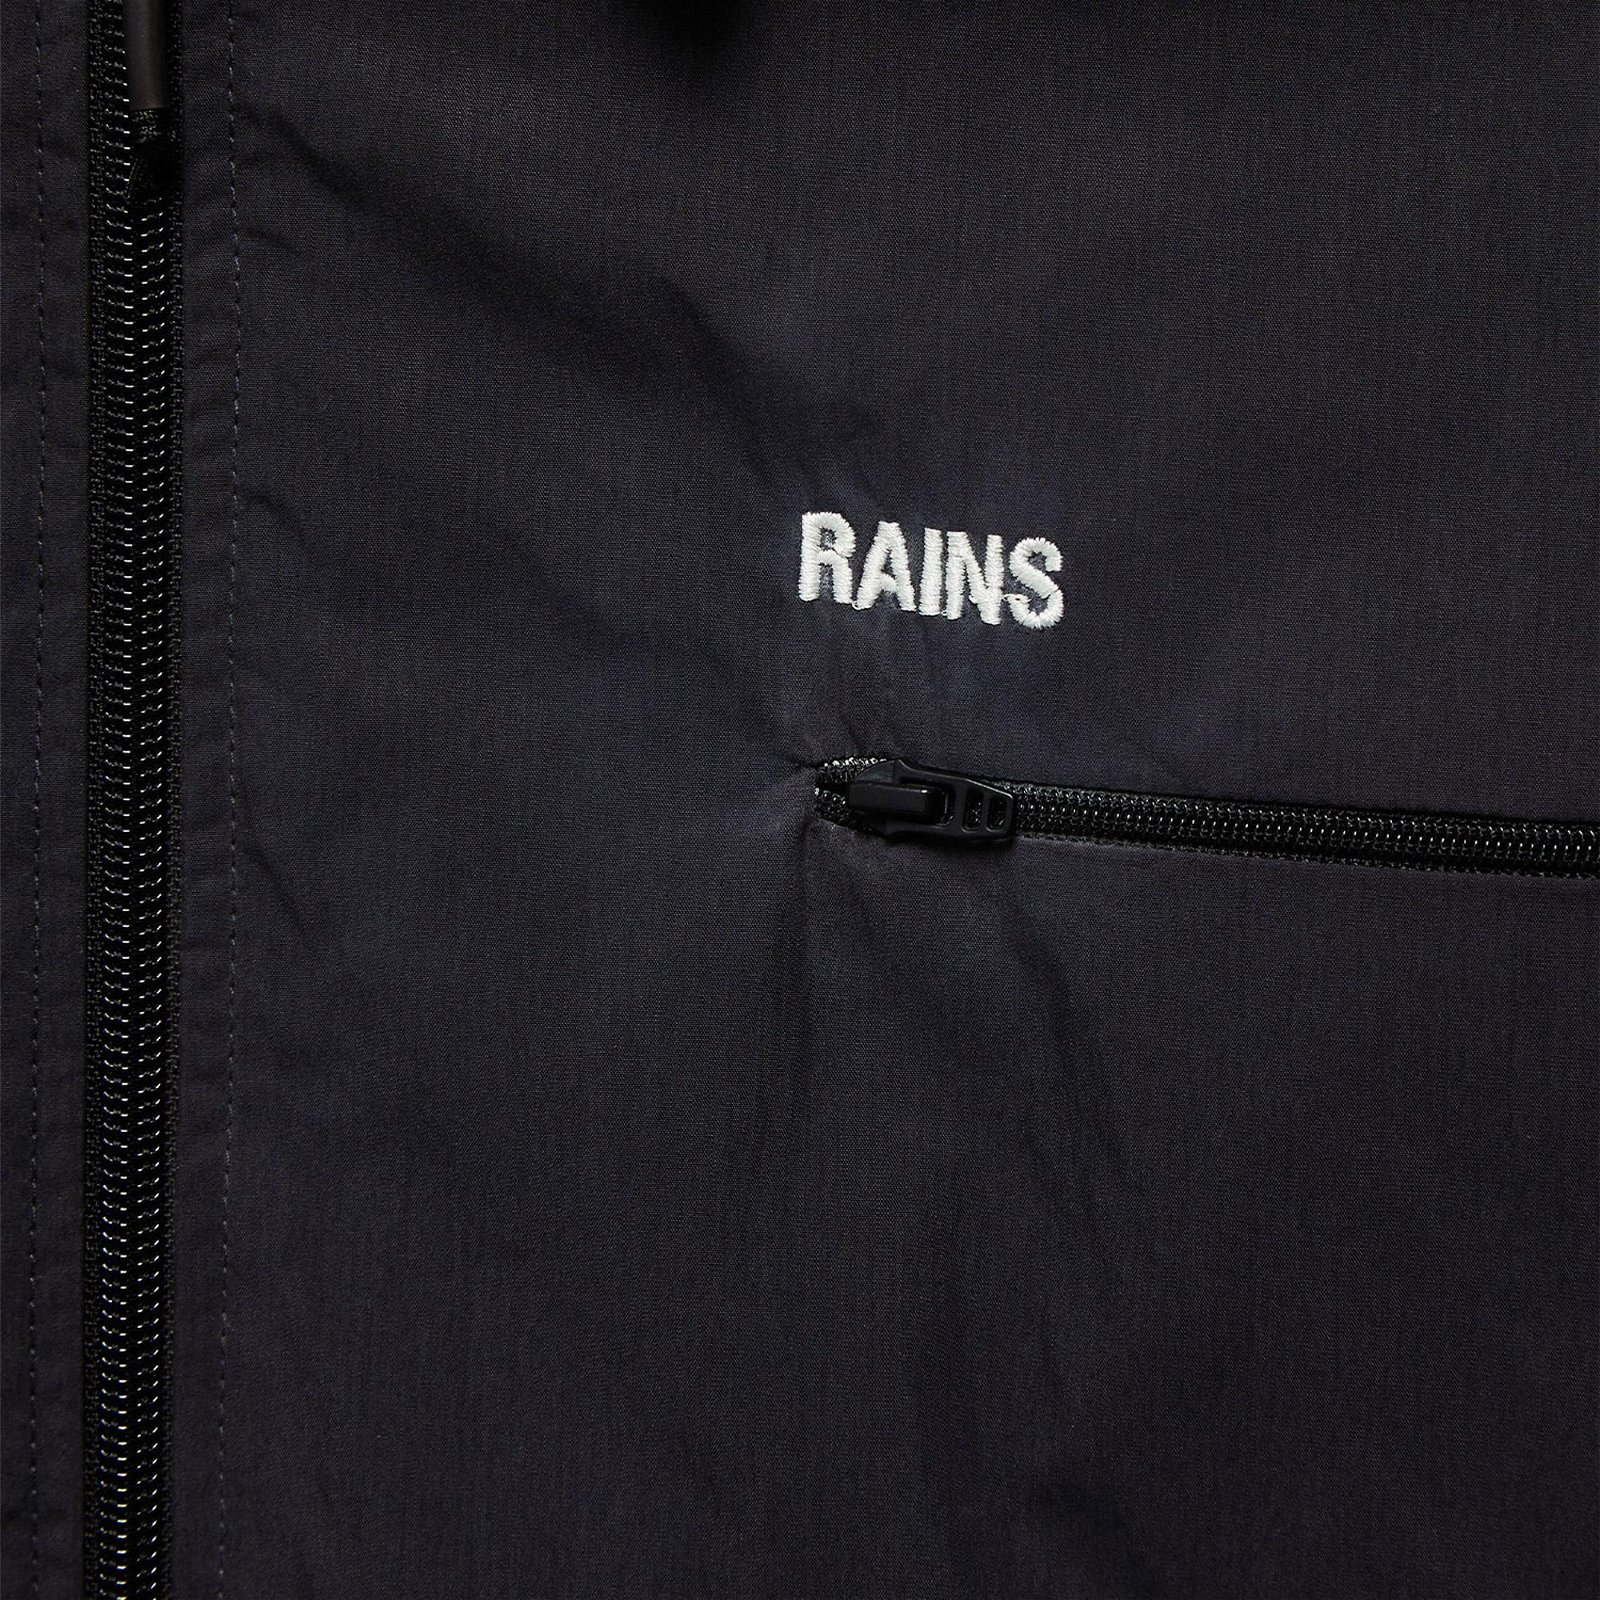 Rains Woven Unisex Siyah Ceket